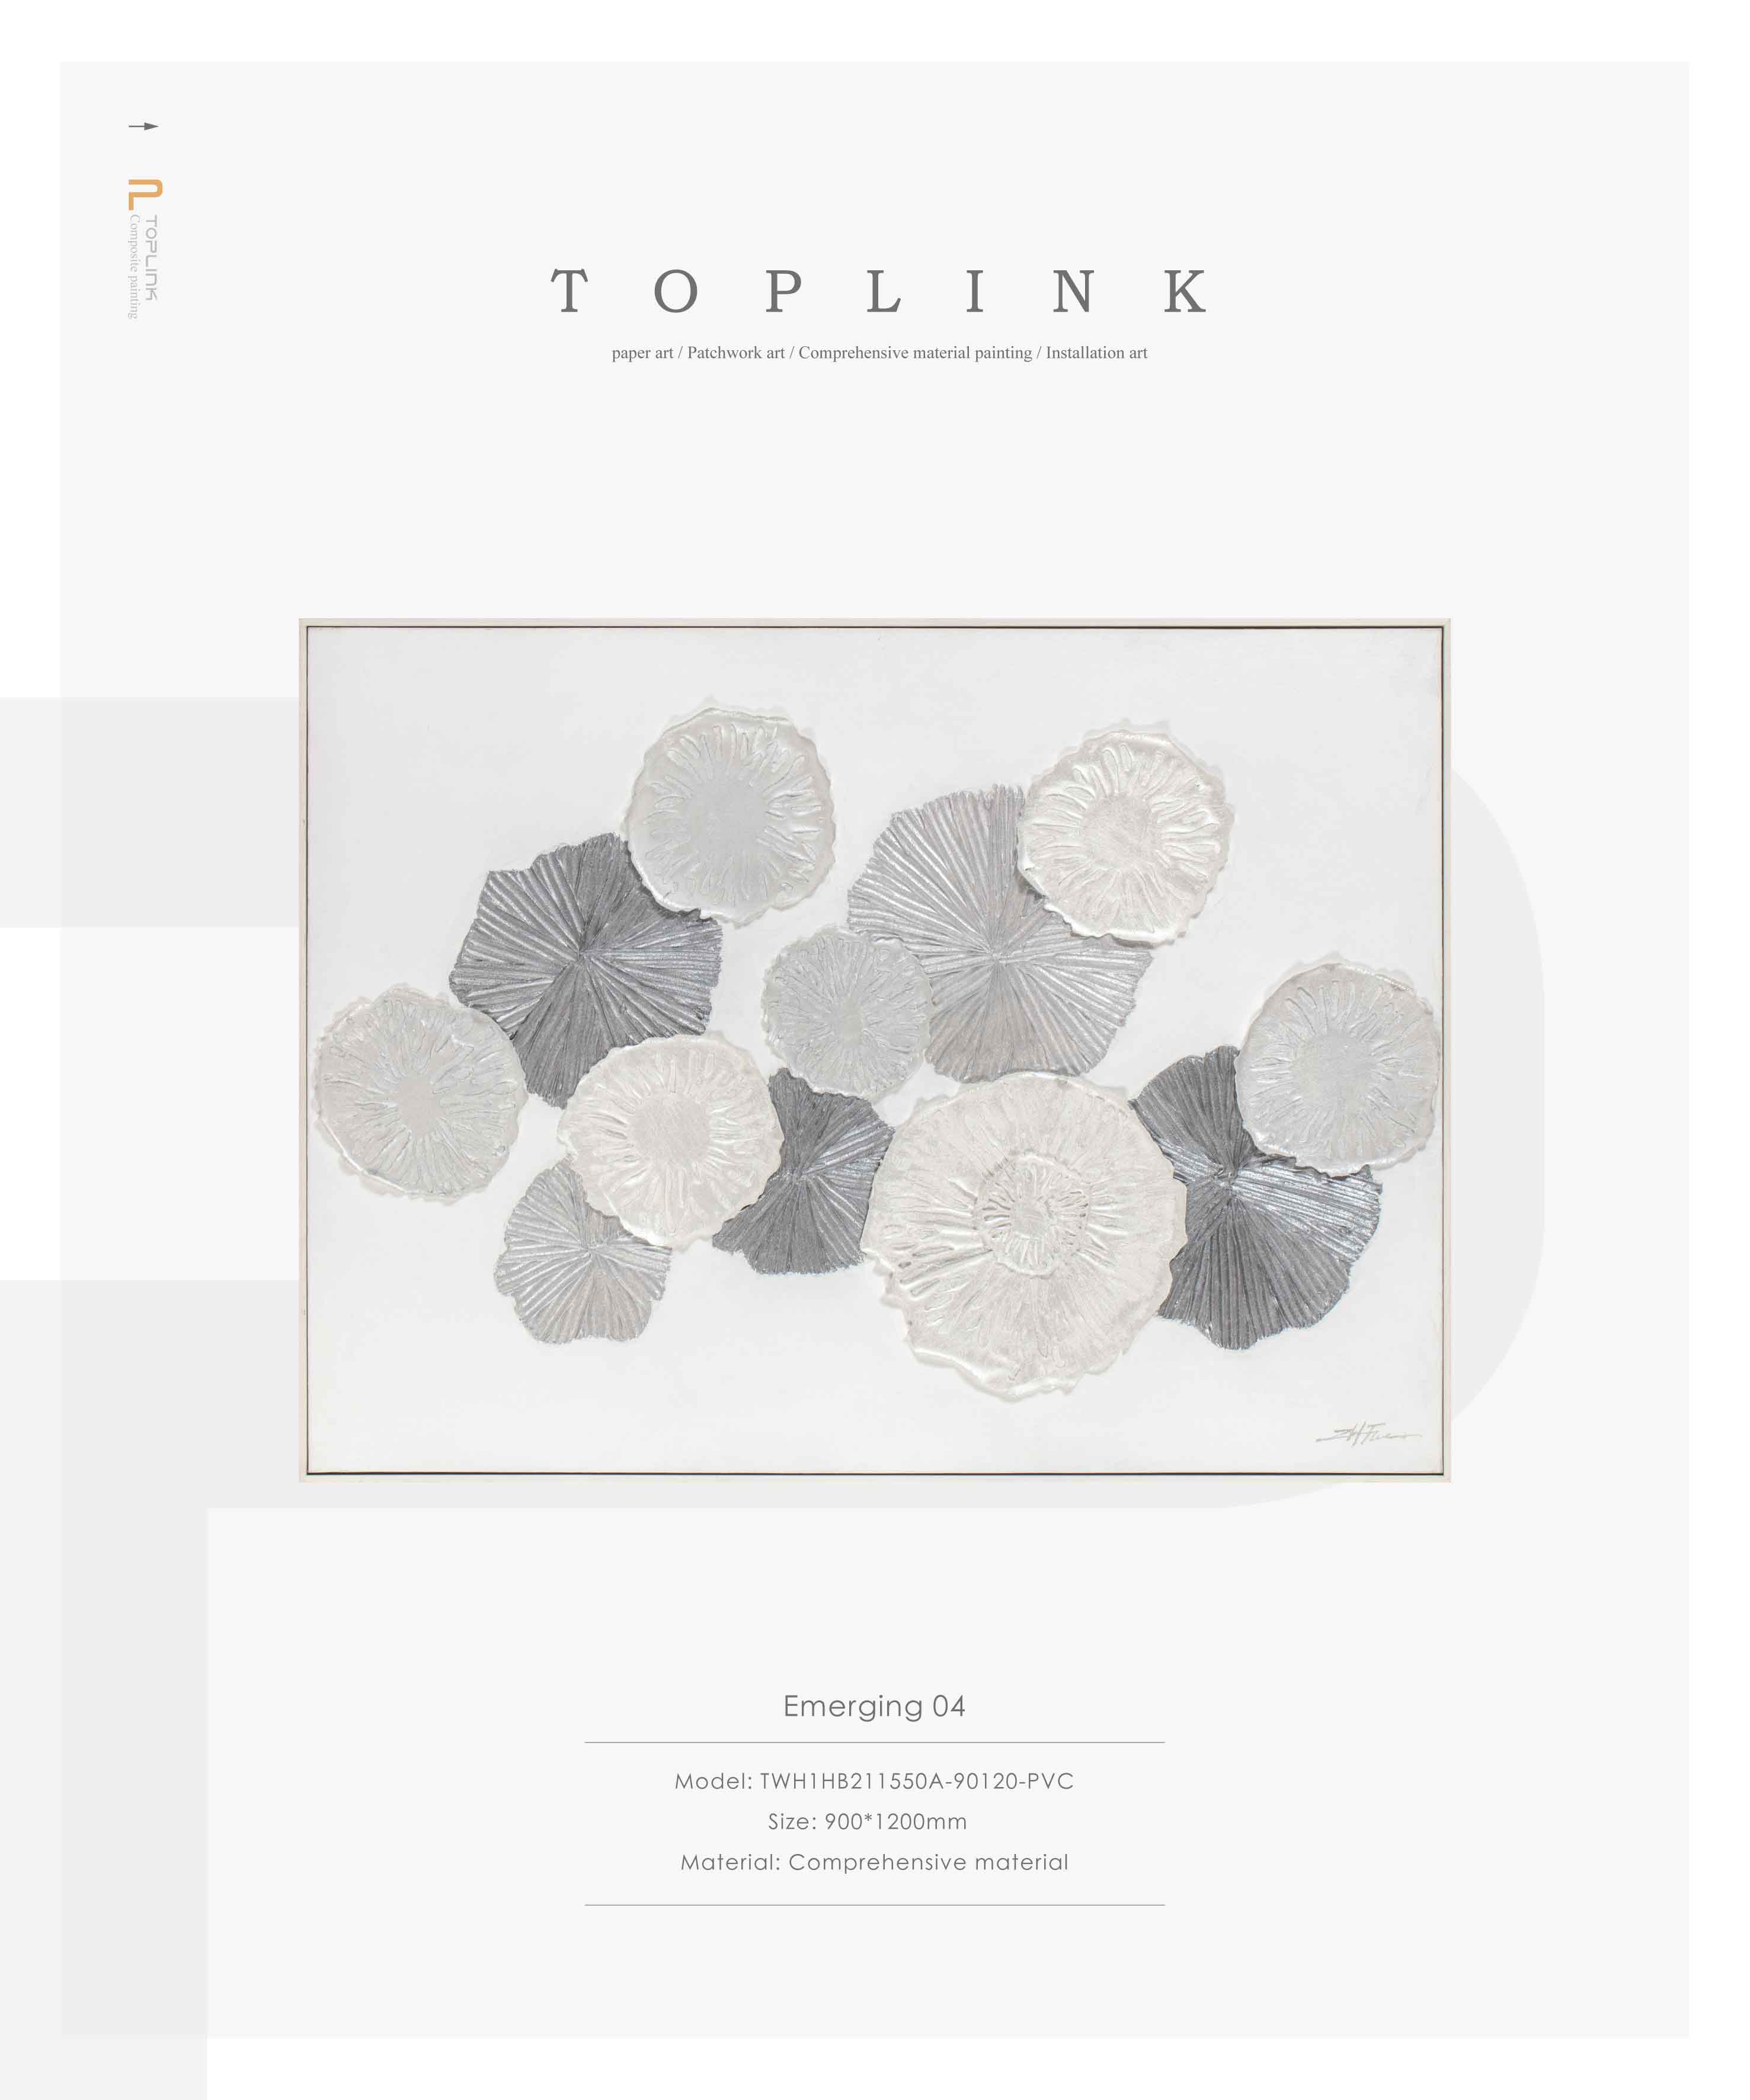 TOPLINK-Comprehensive Material